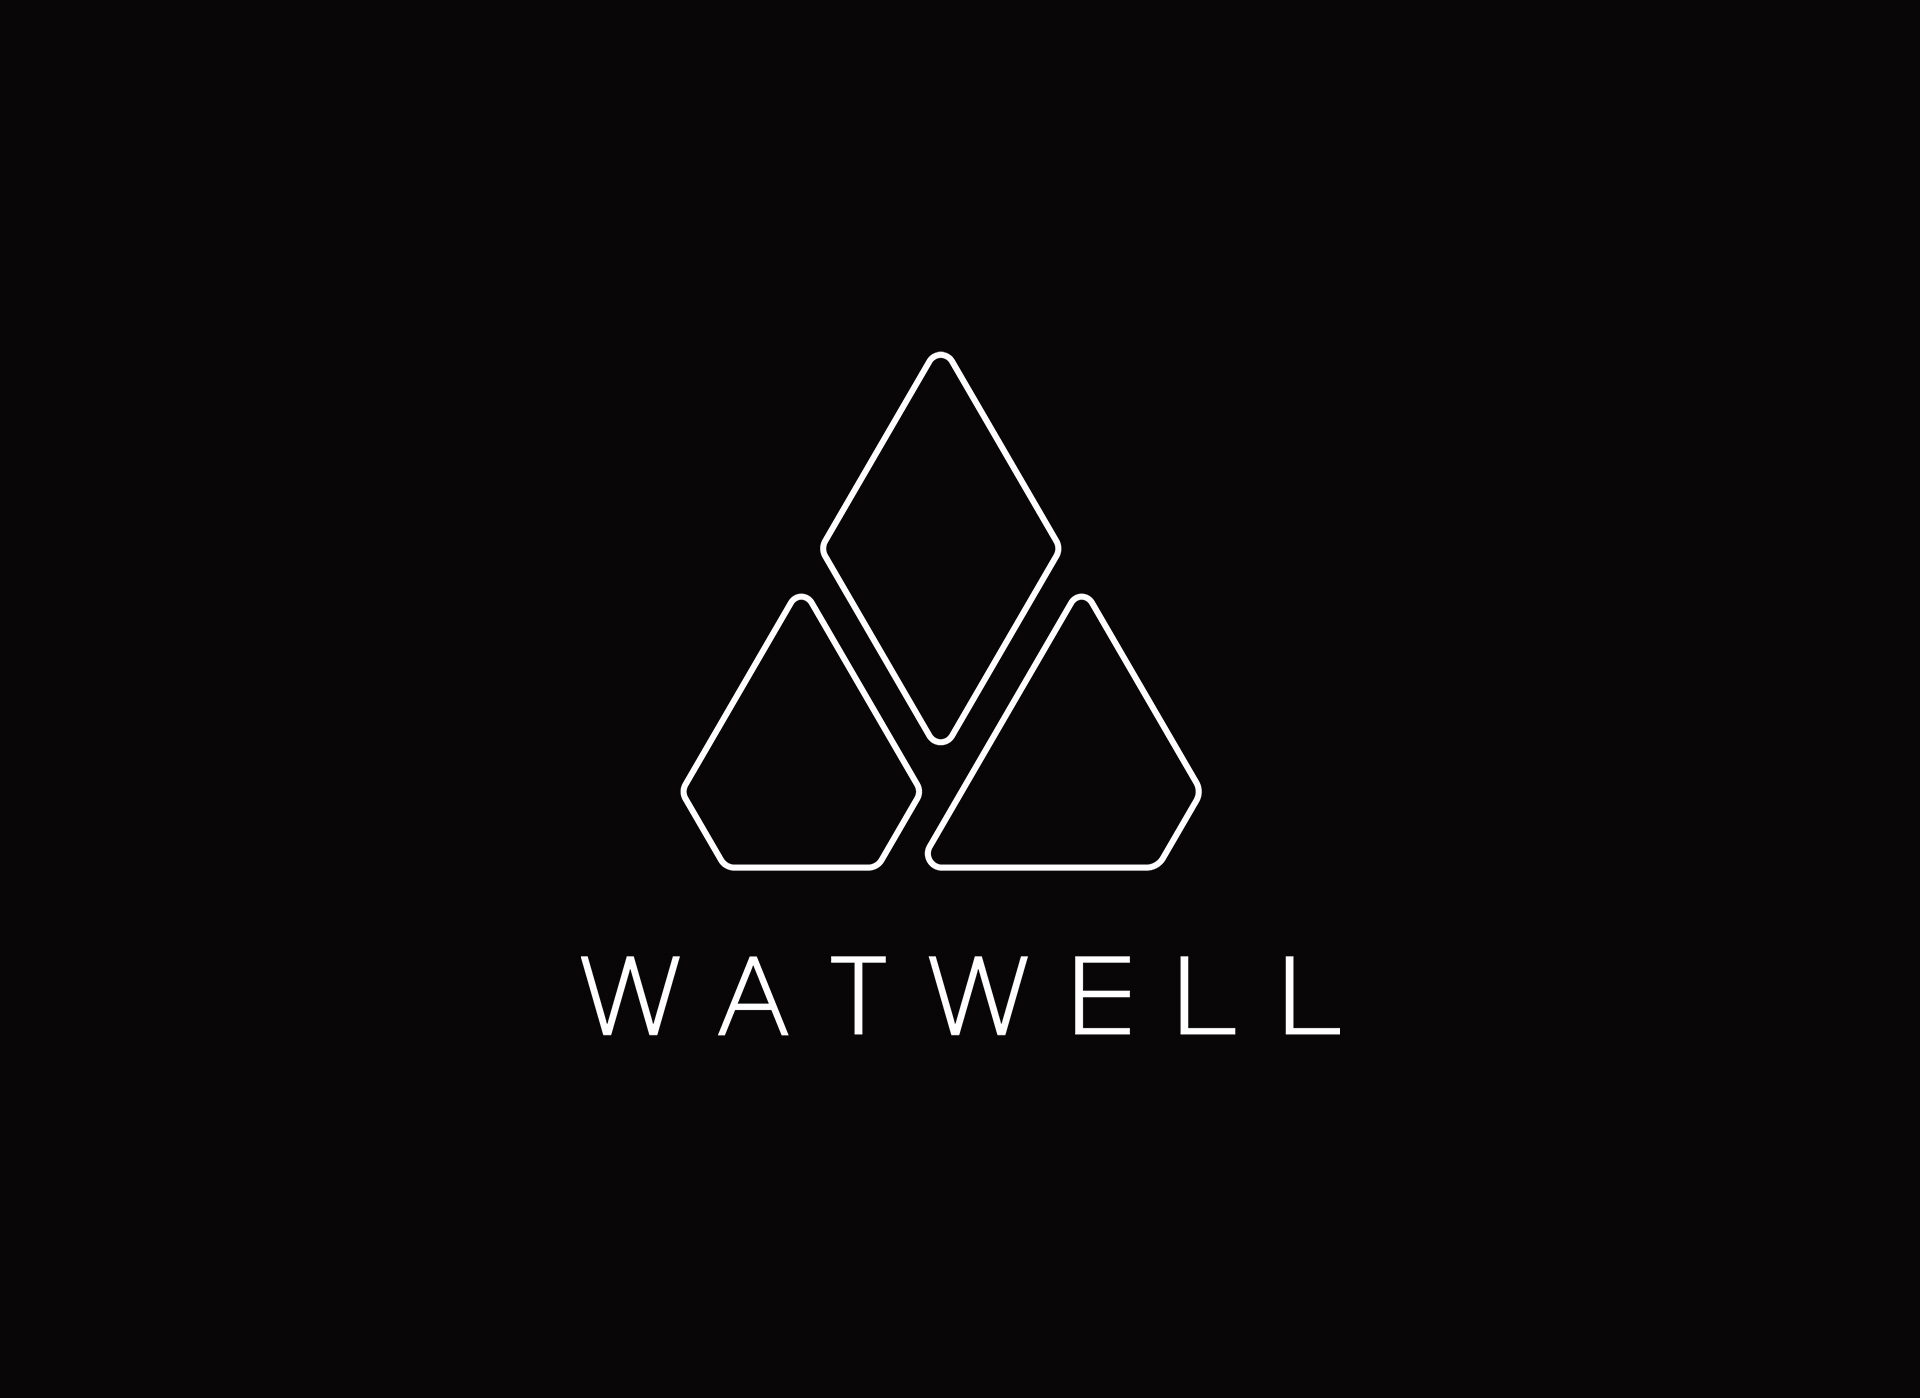 WATWELL – технологический российский бренд в условиях новых реалий